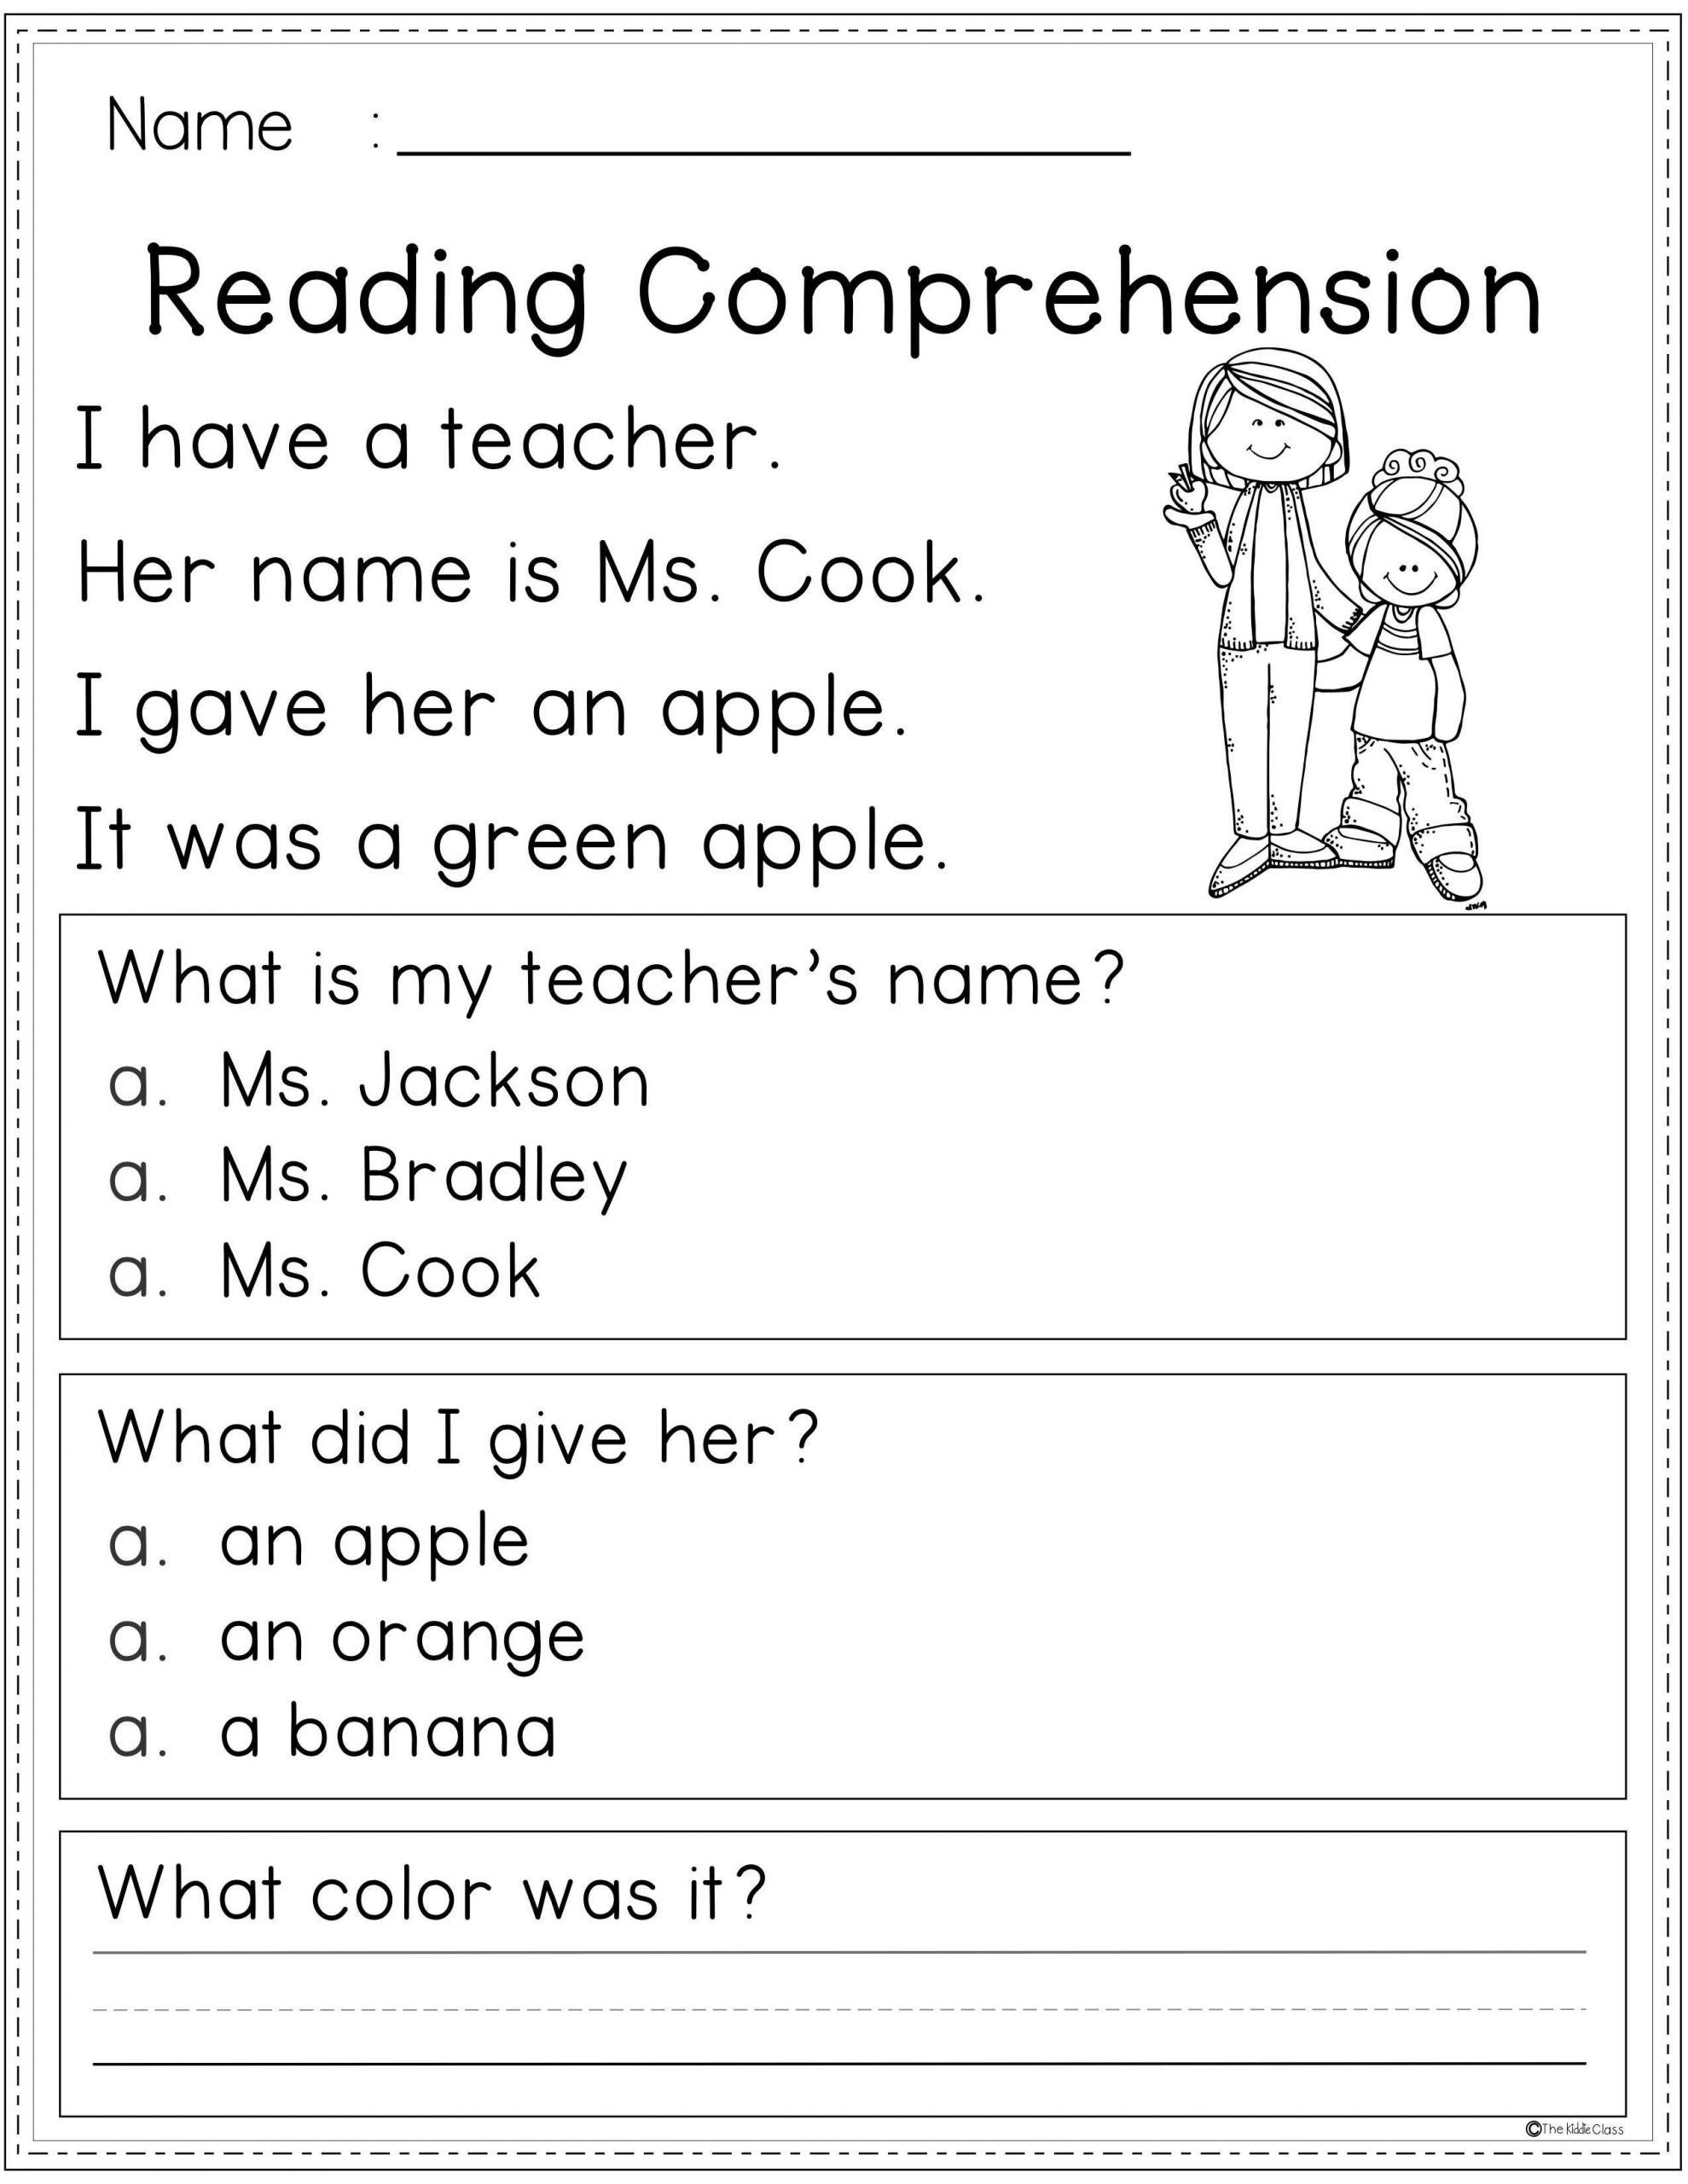 free-2nd-grade-reading-comprehension-worksheets-reading-comprehension